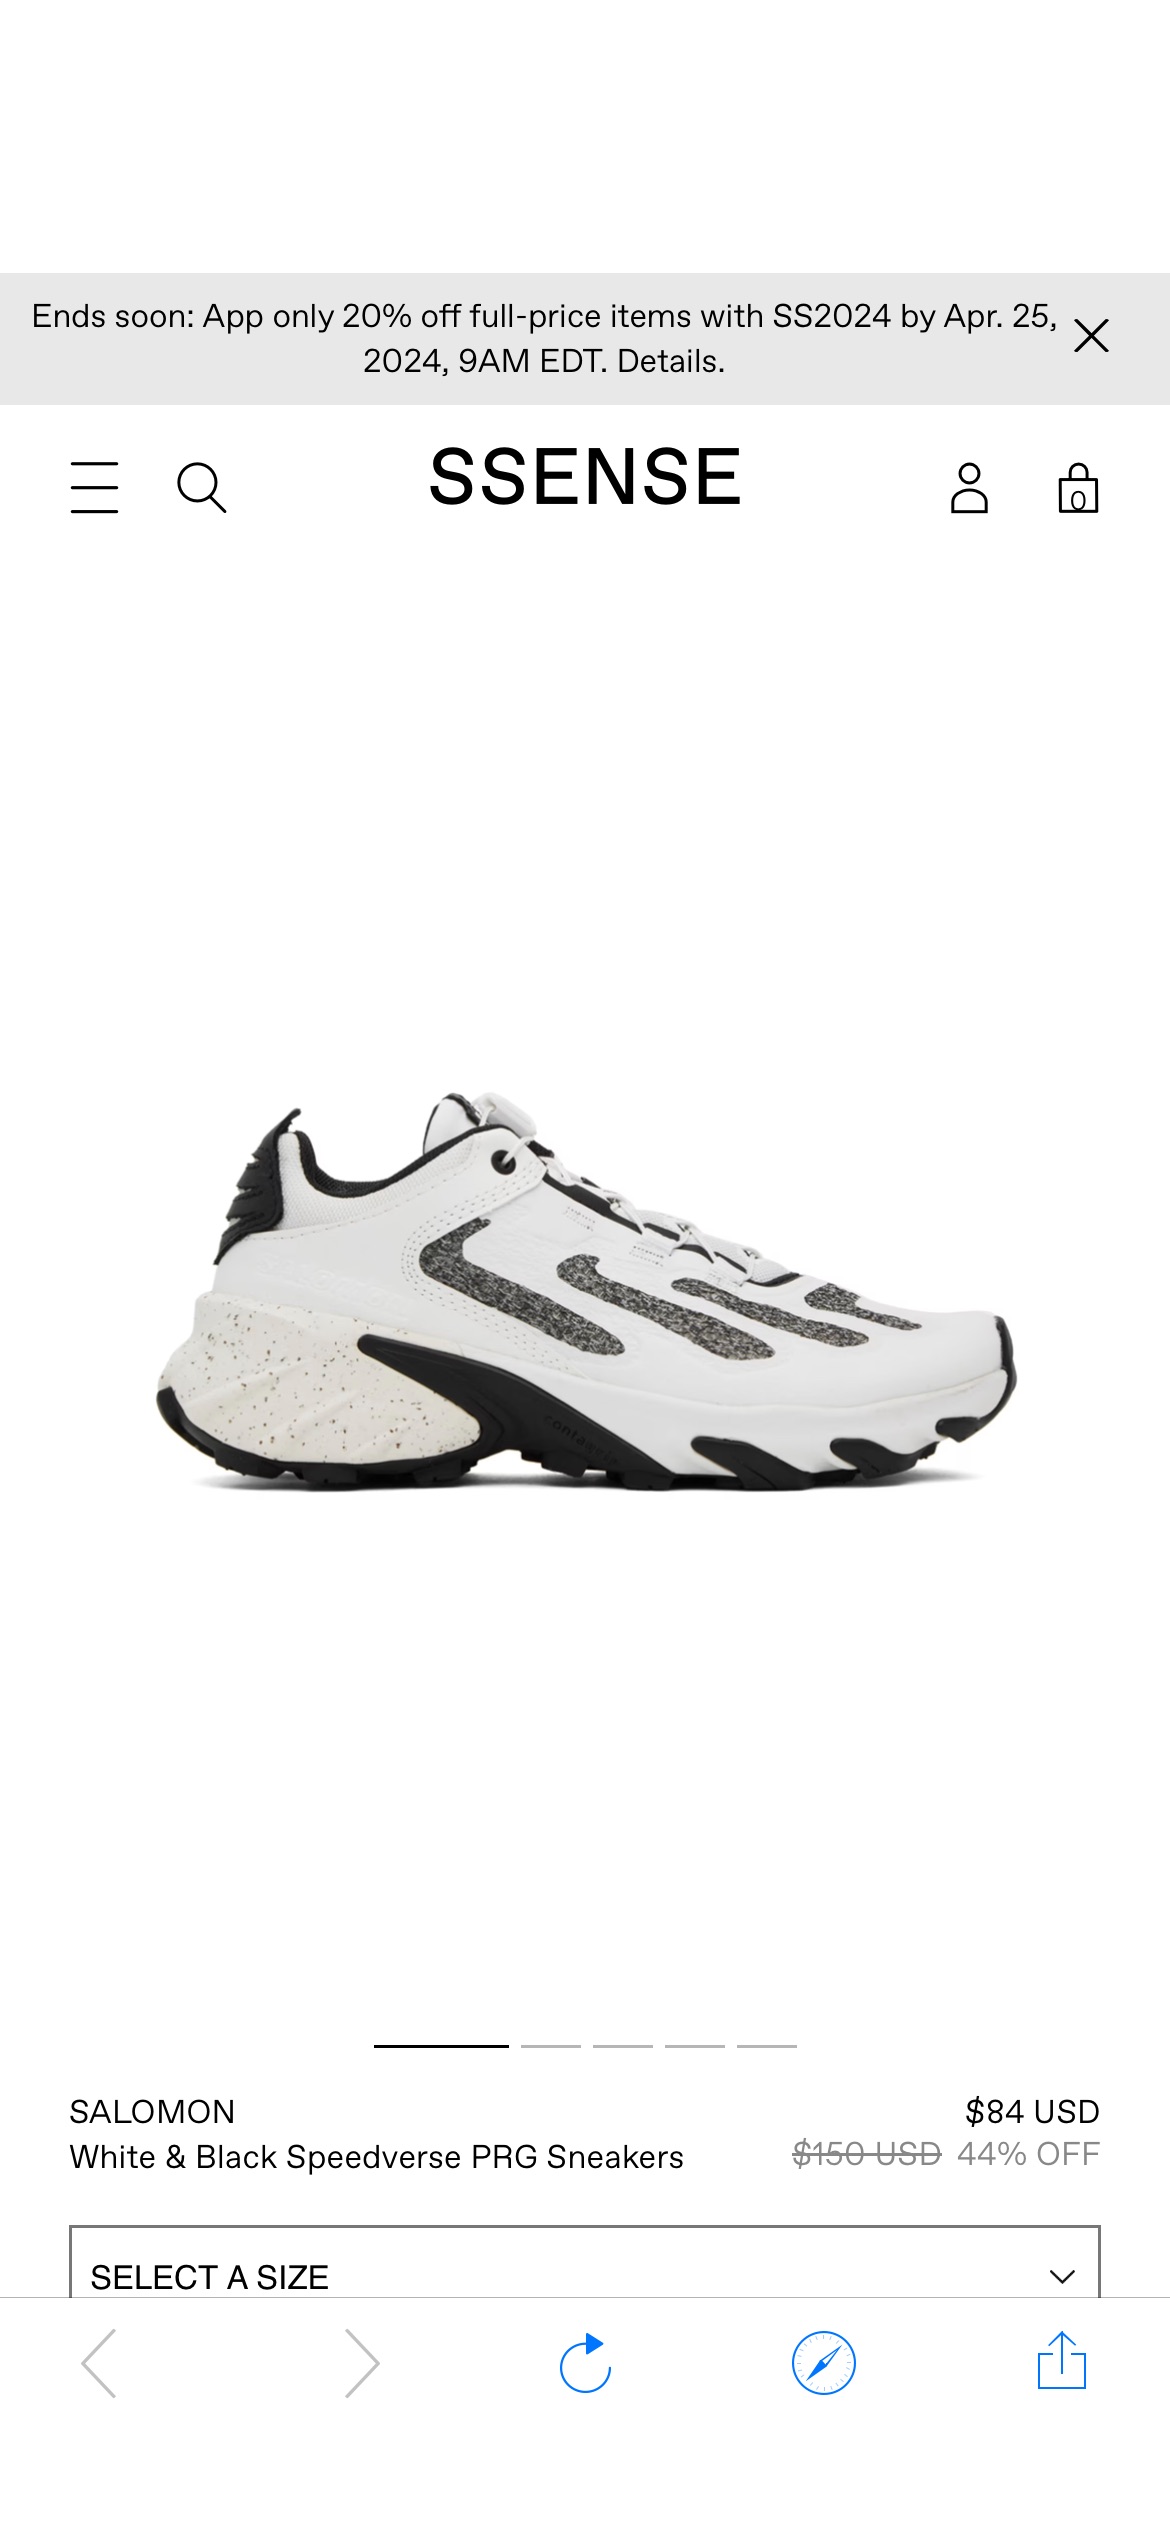 White & Black Speedverse PRG Sneakers by Salomon on Sale